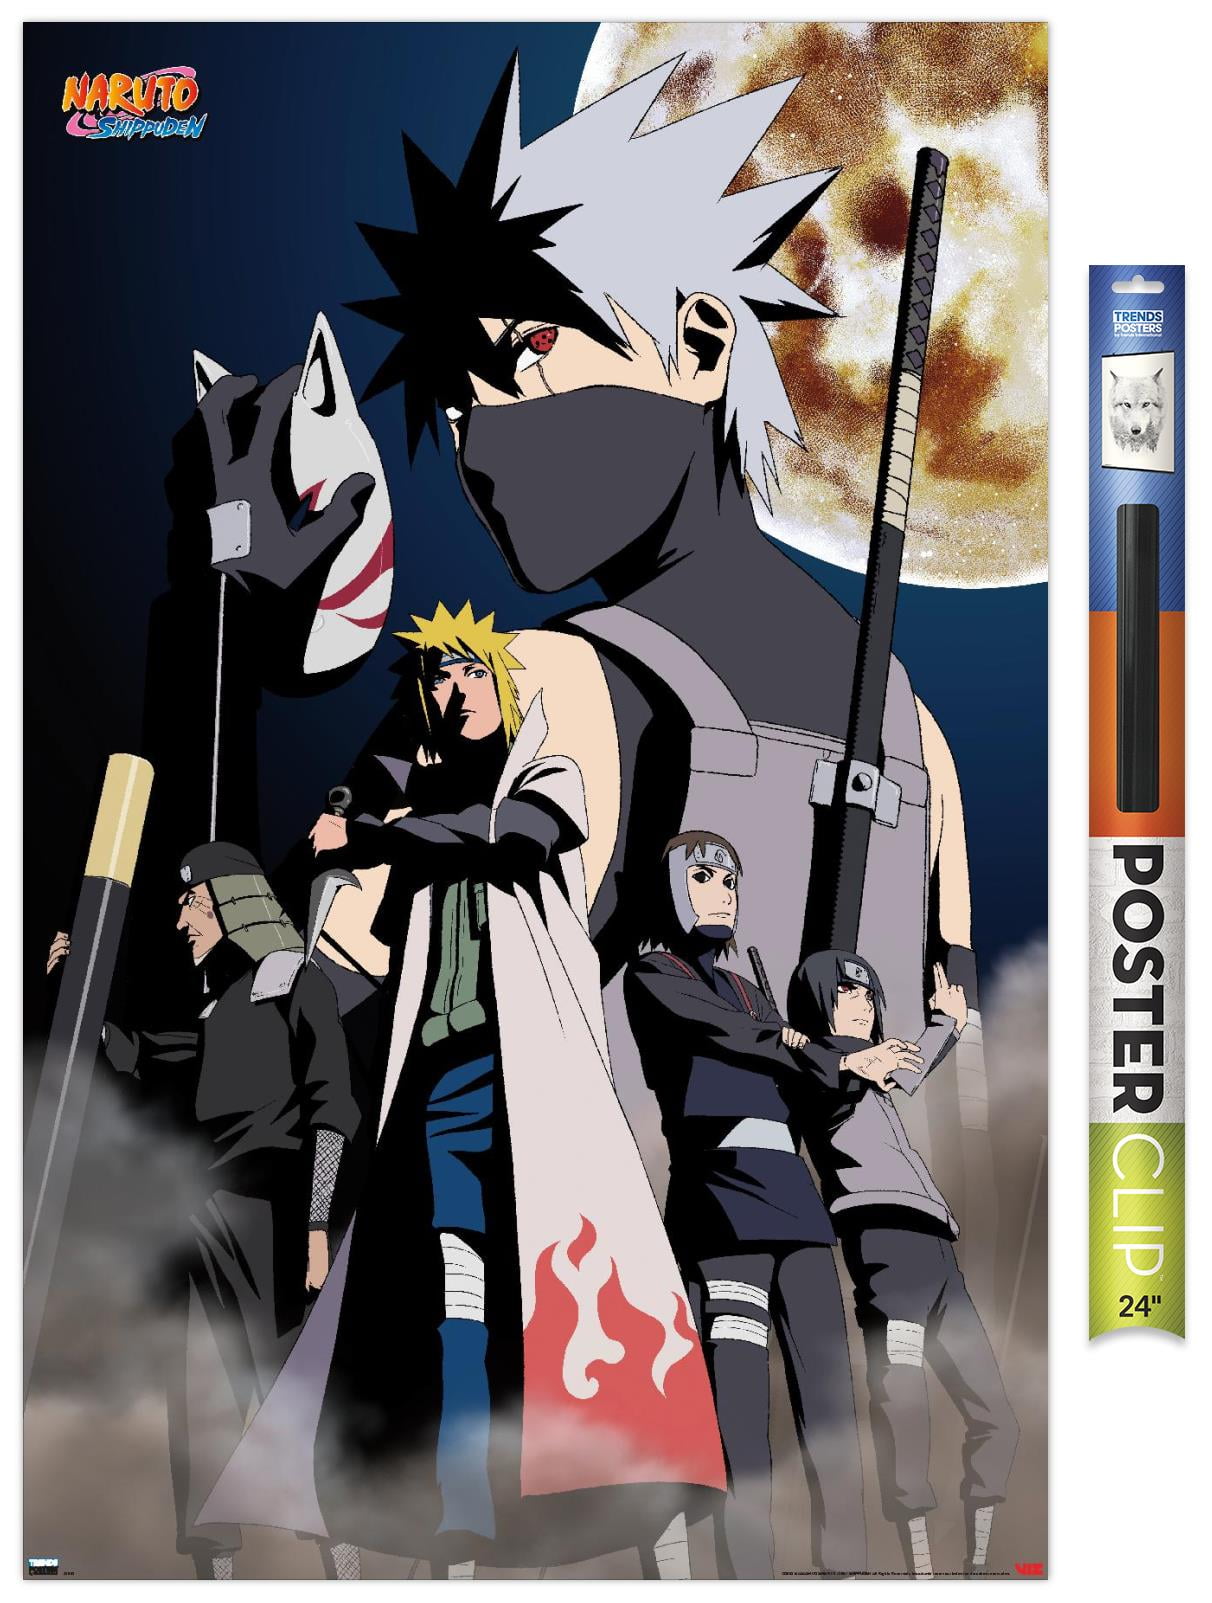 Naruto Shippuden - Kakashi Key Art Wall Poster, 22.375 x 34 